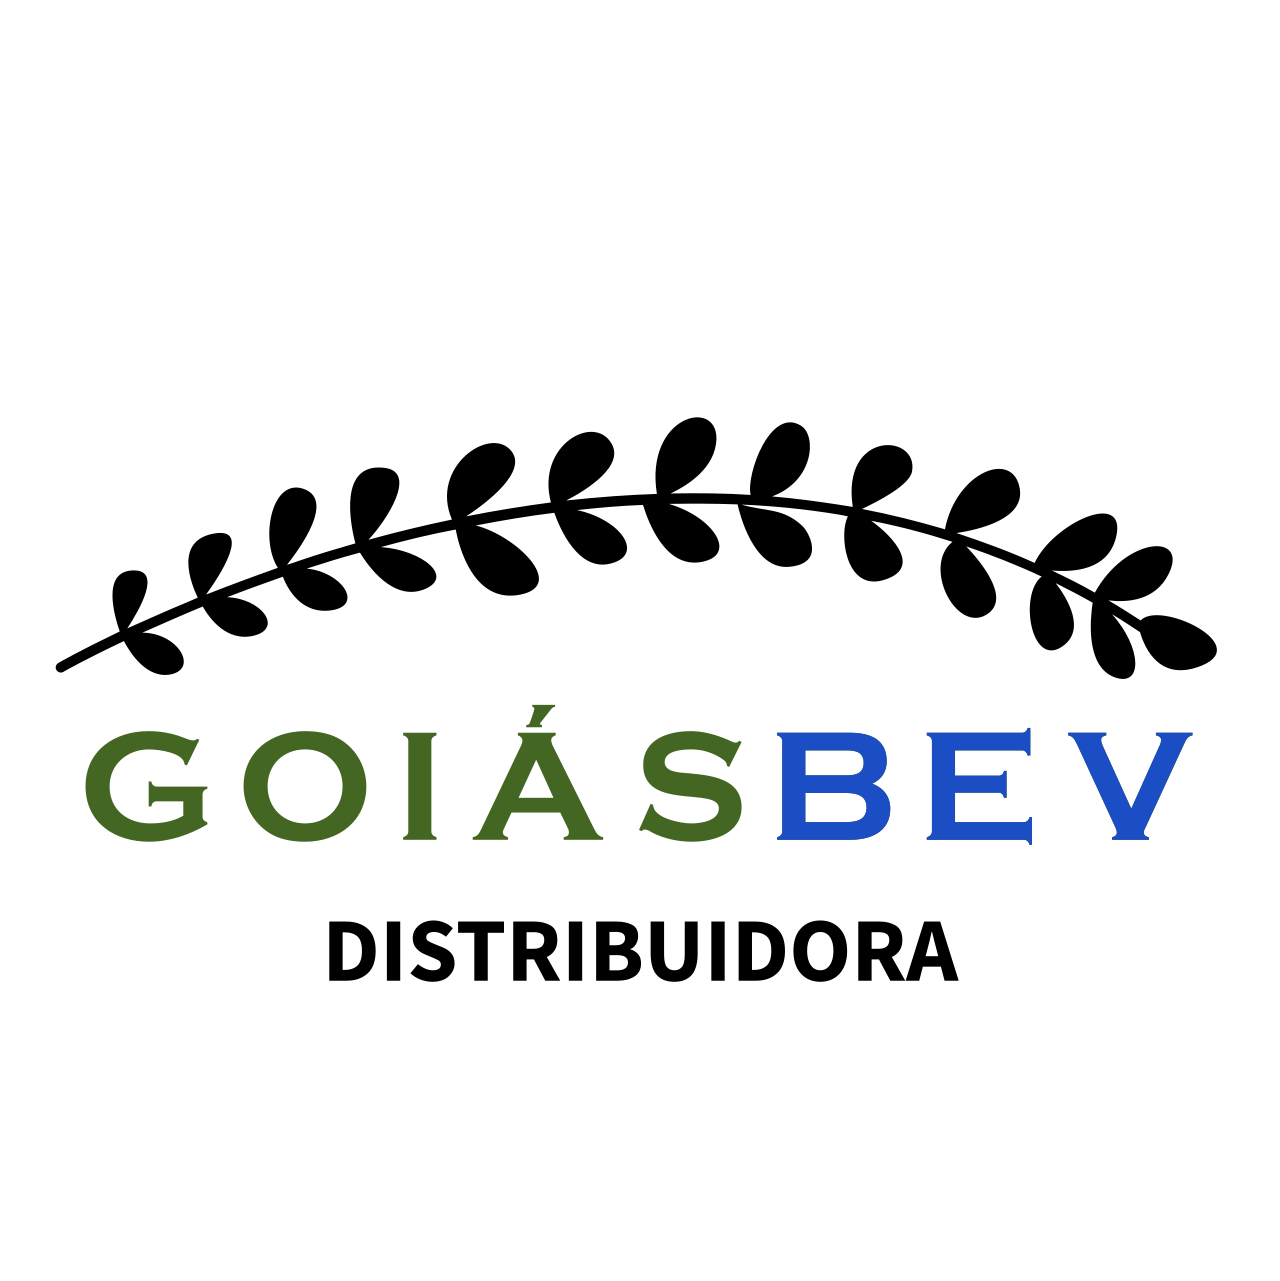 GoiásBEV's web page